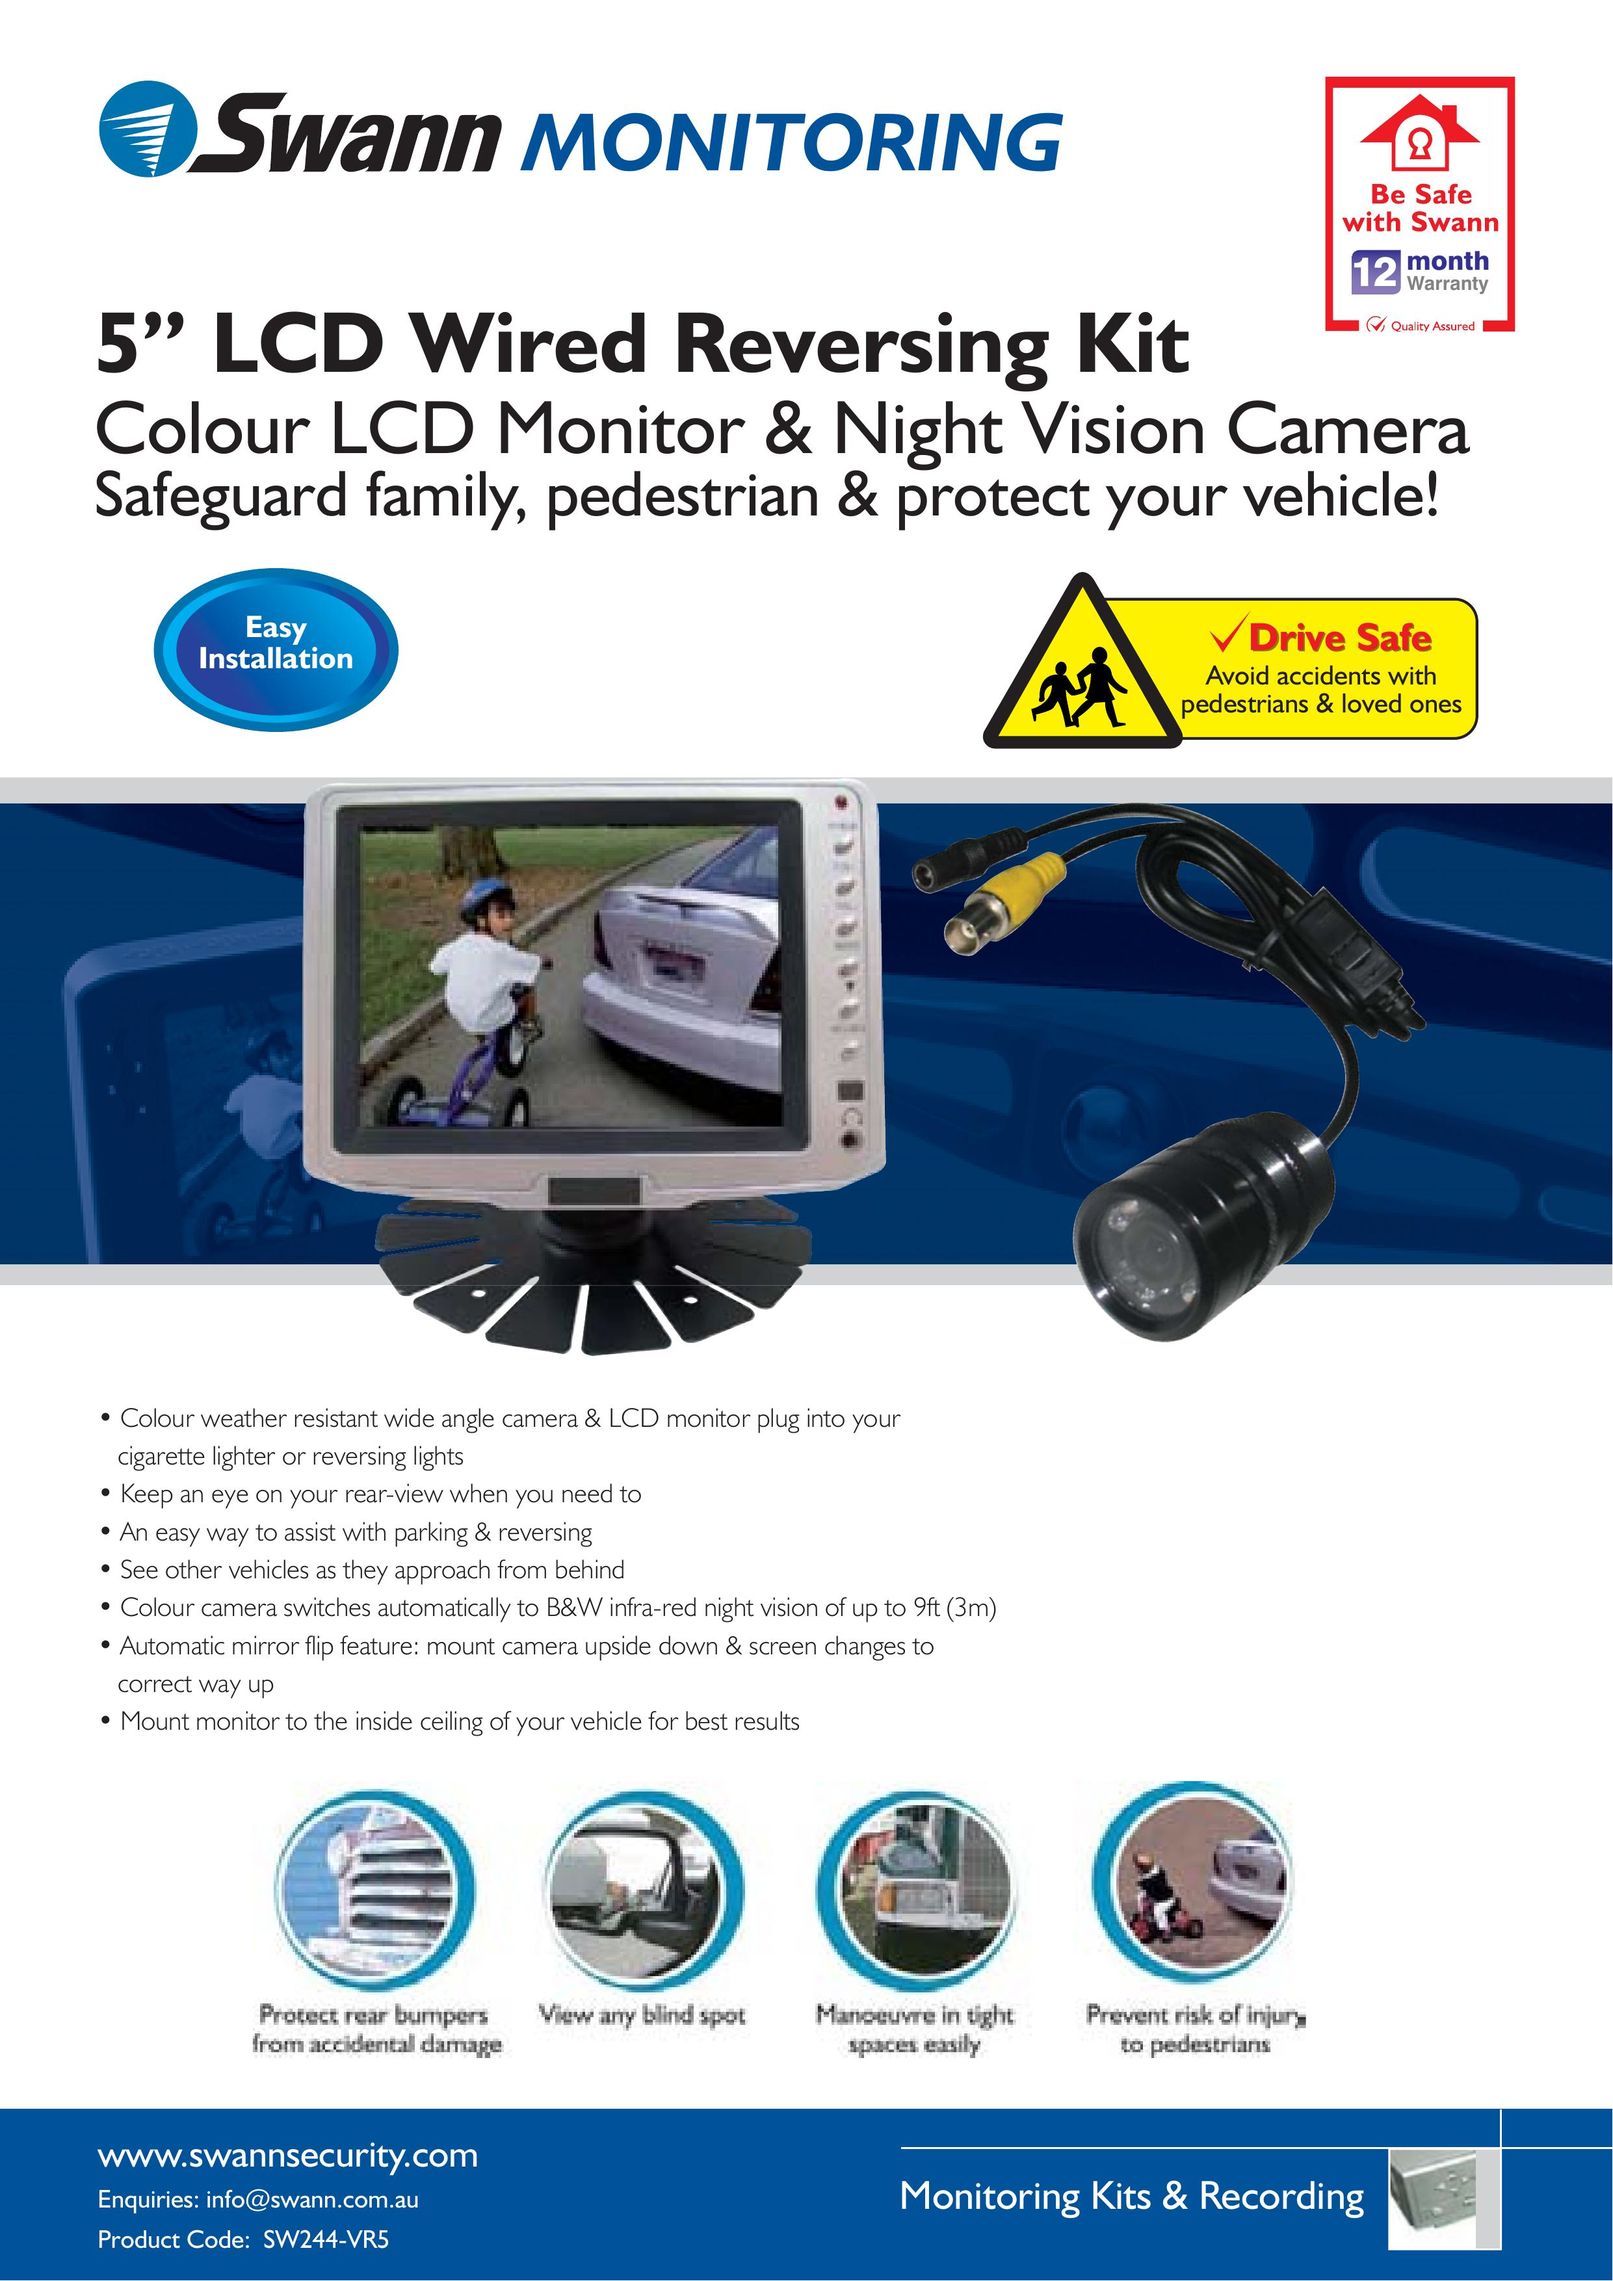 Swann SW244-VR5 Car Video System User Manual